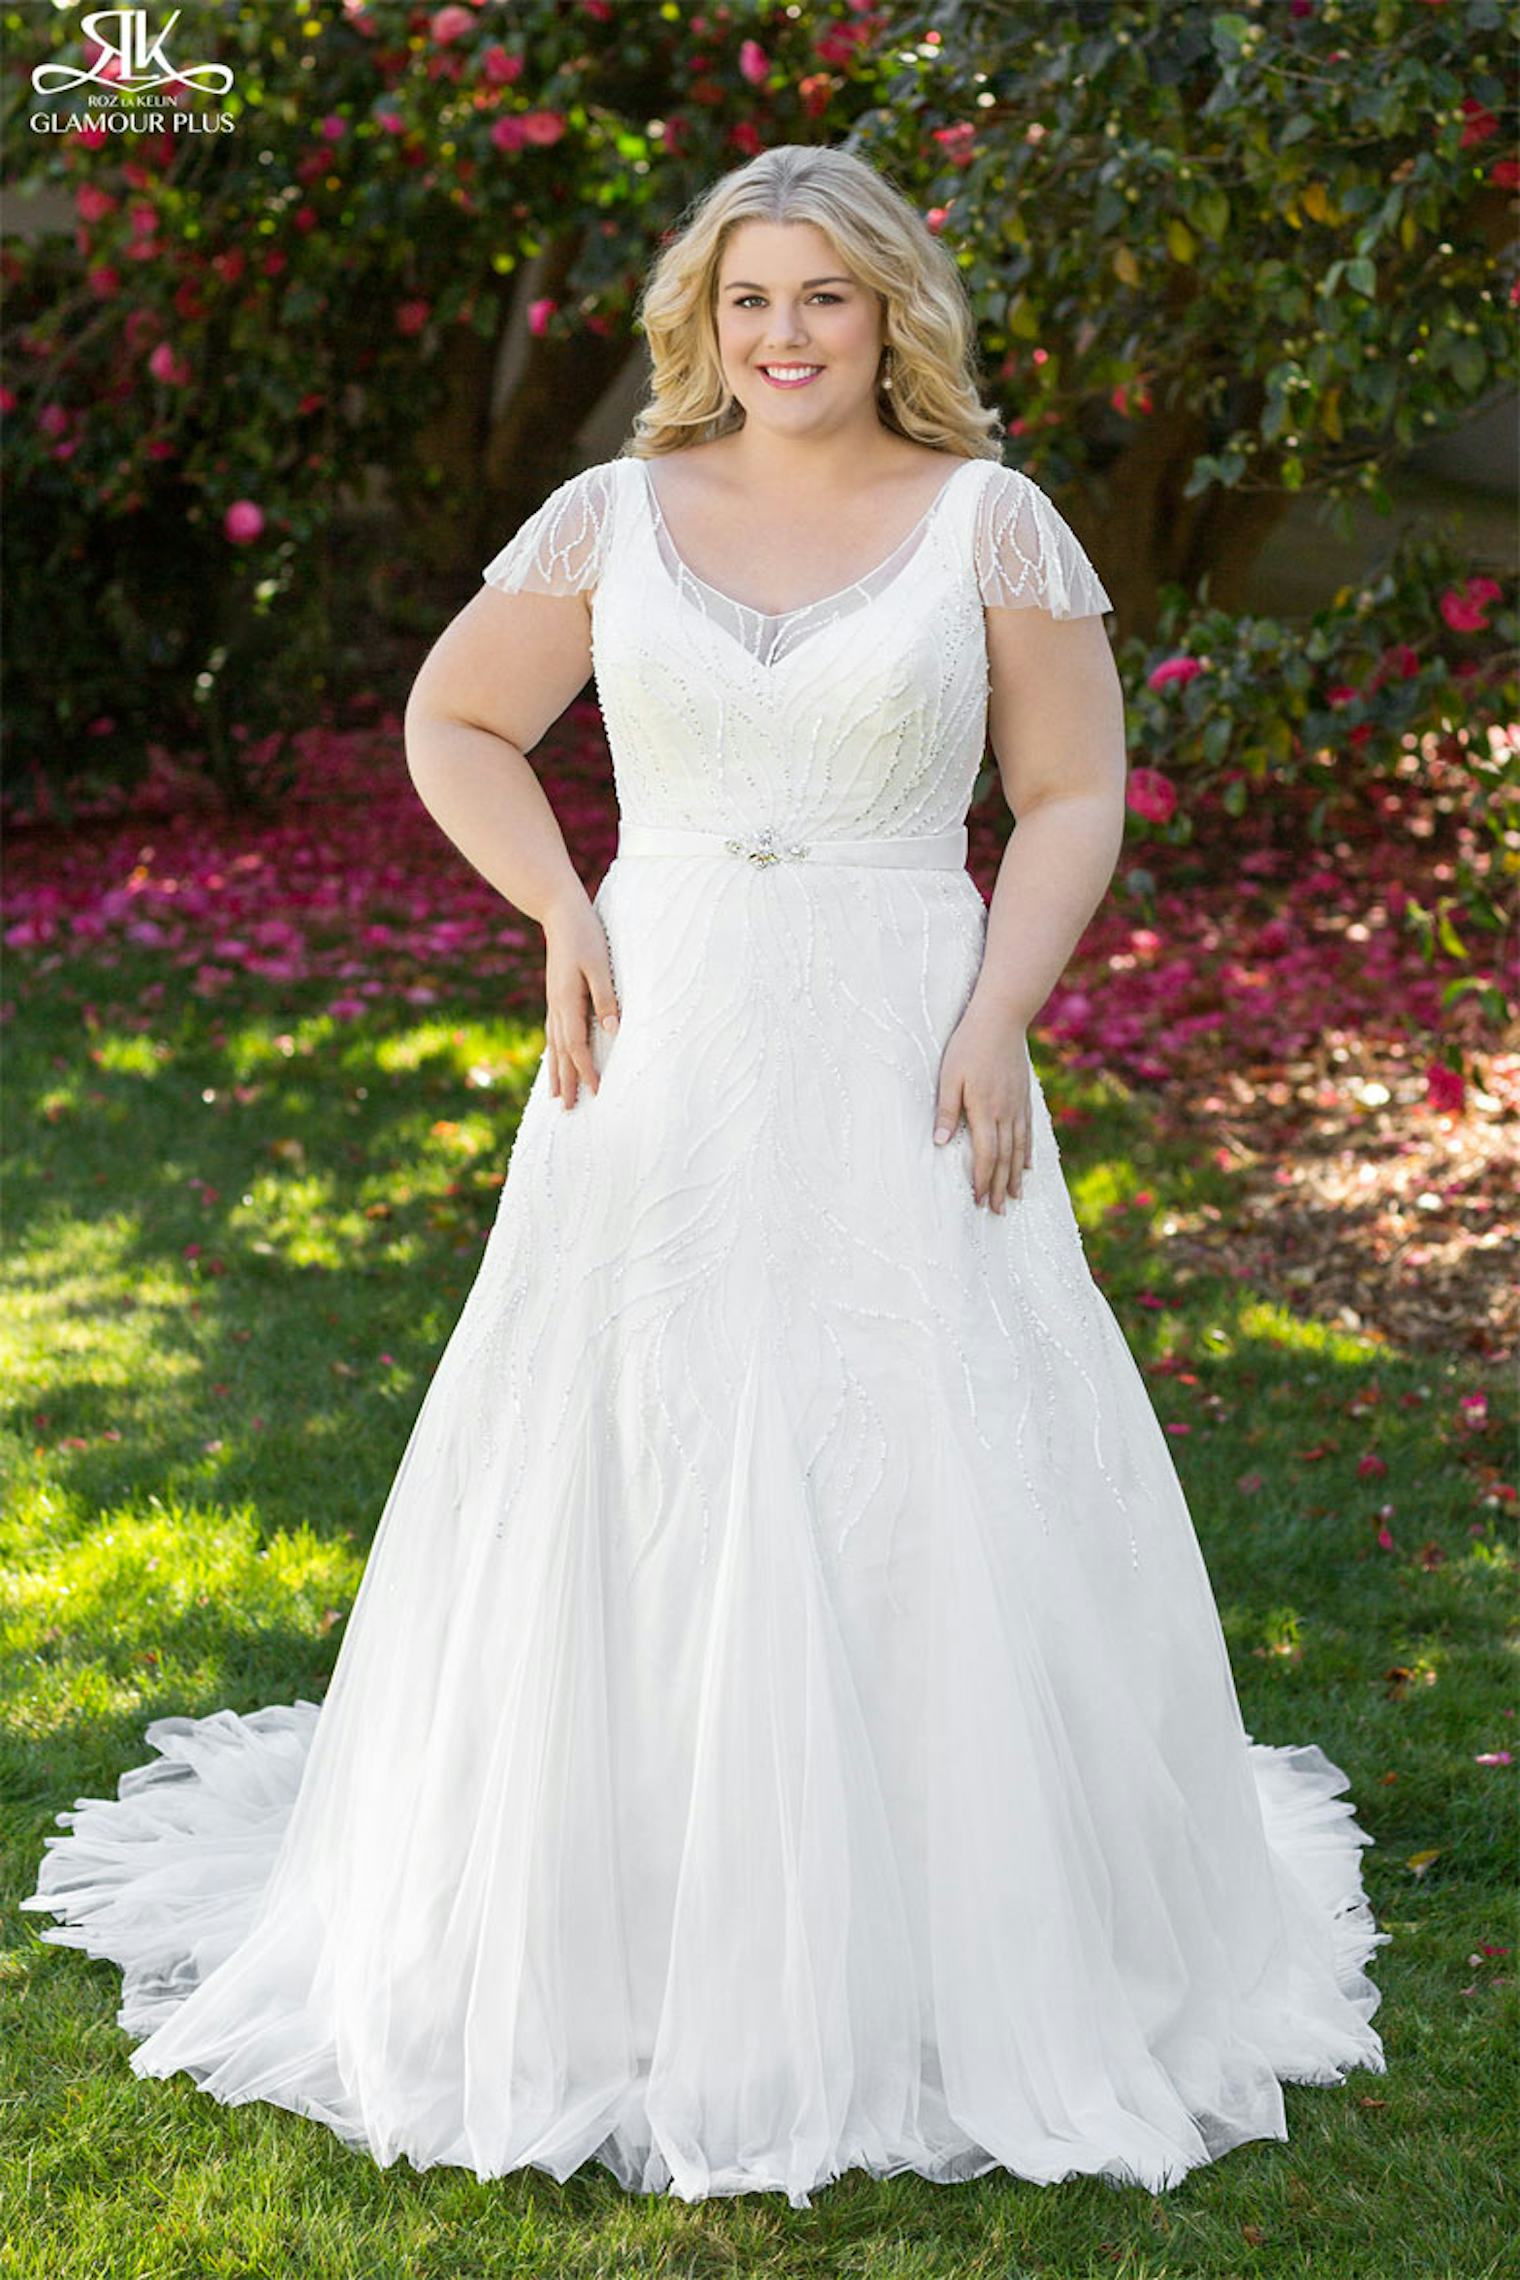  wedding dress styles for plus size brides